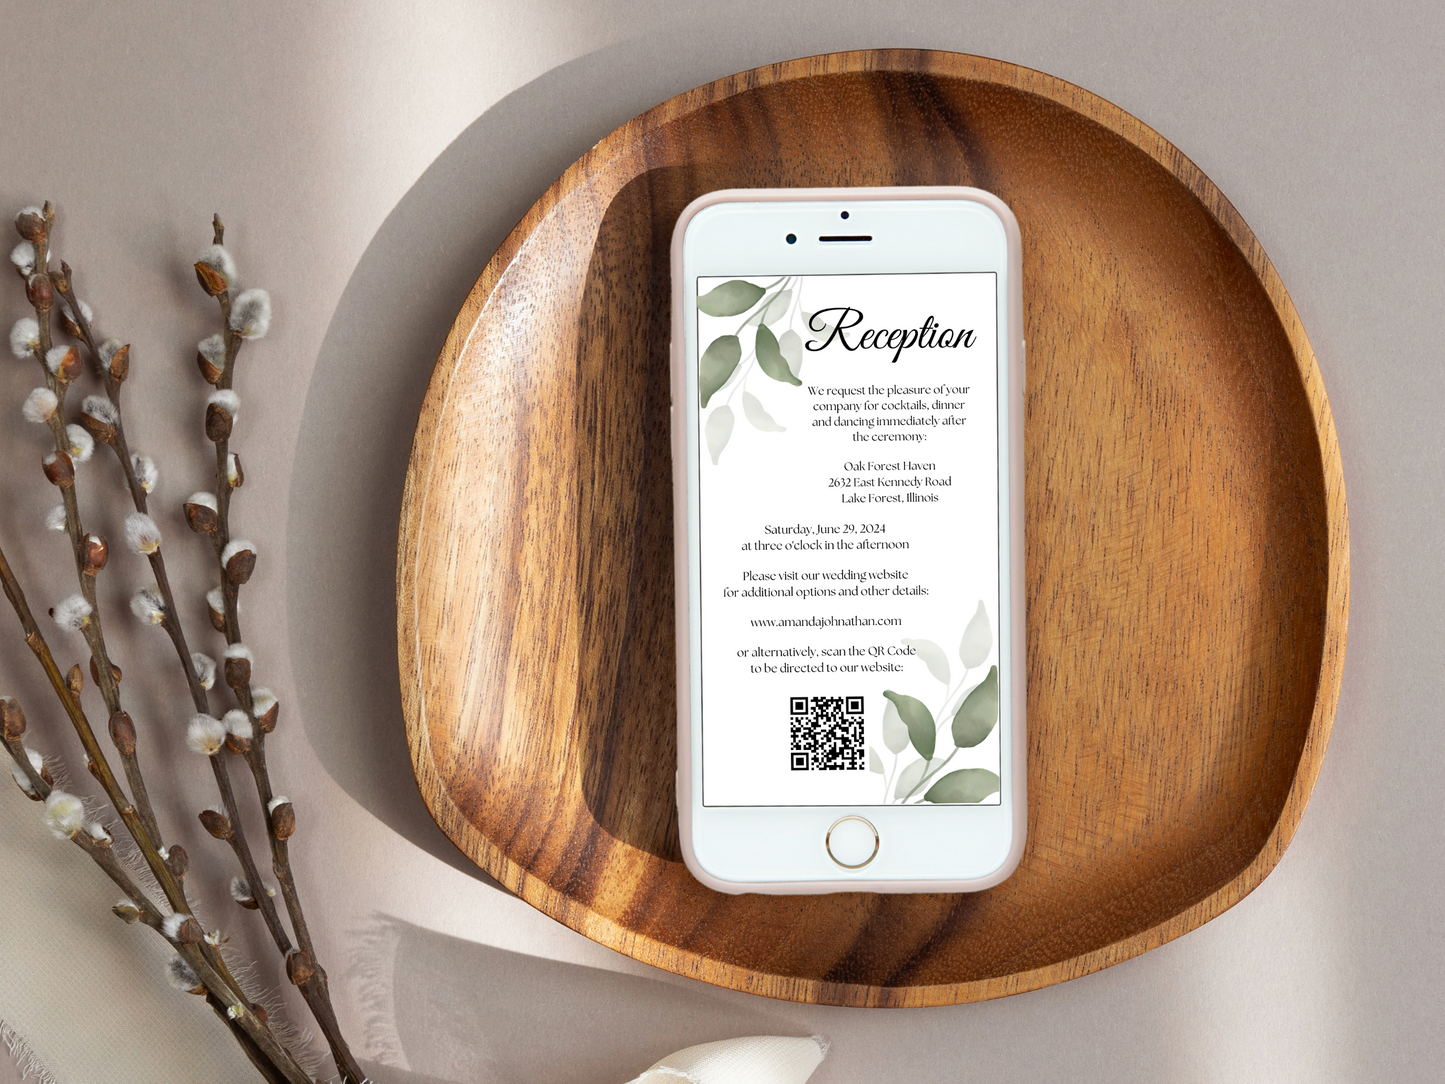 Watercolor Greenery Leaves Wedding Reception Invitation Templates, Printable & Digital Templates